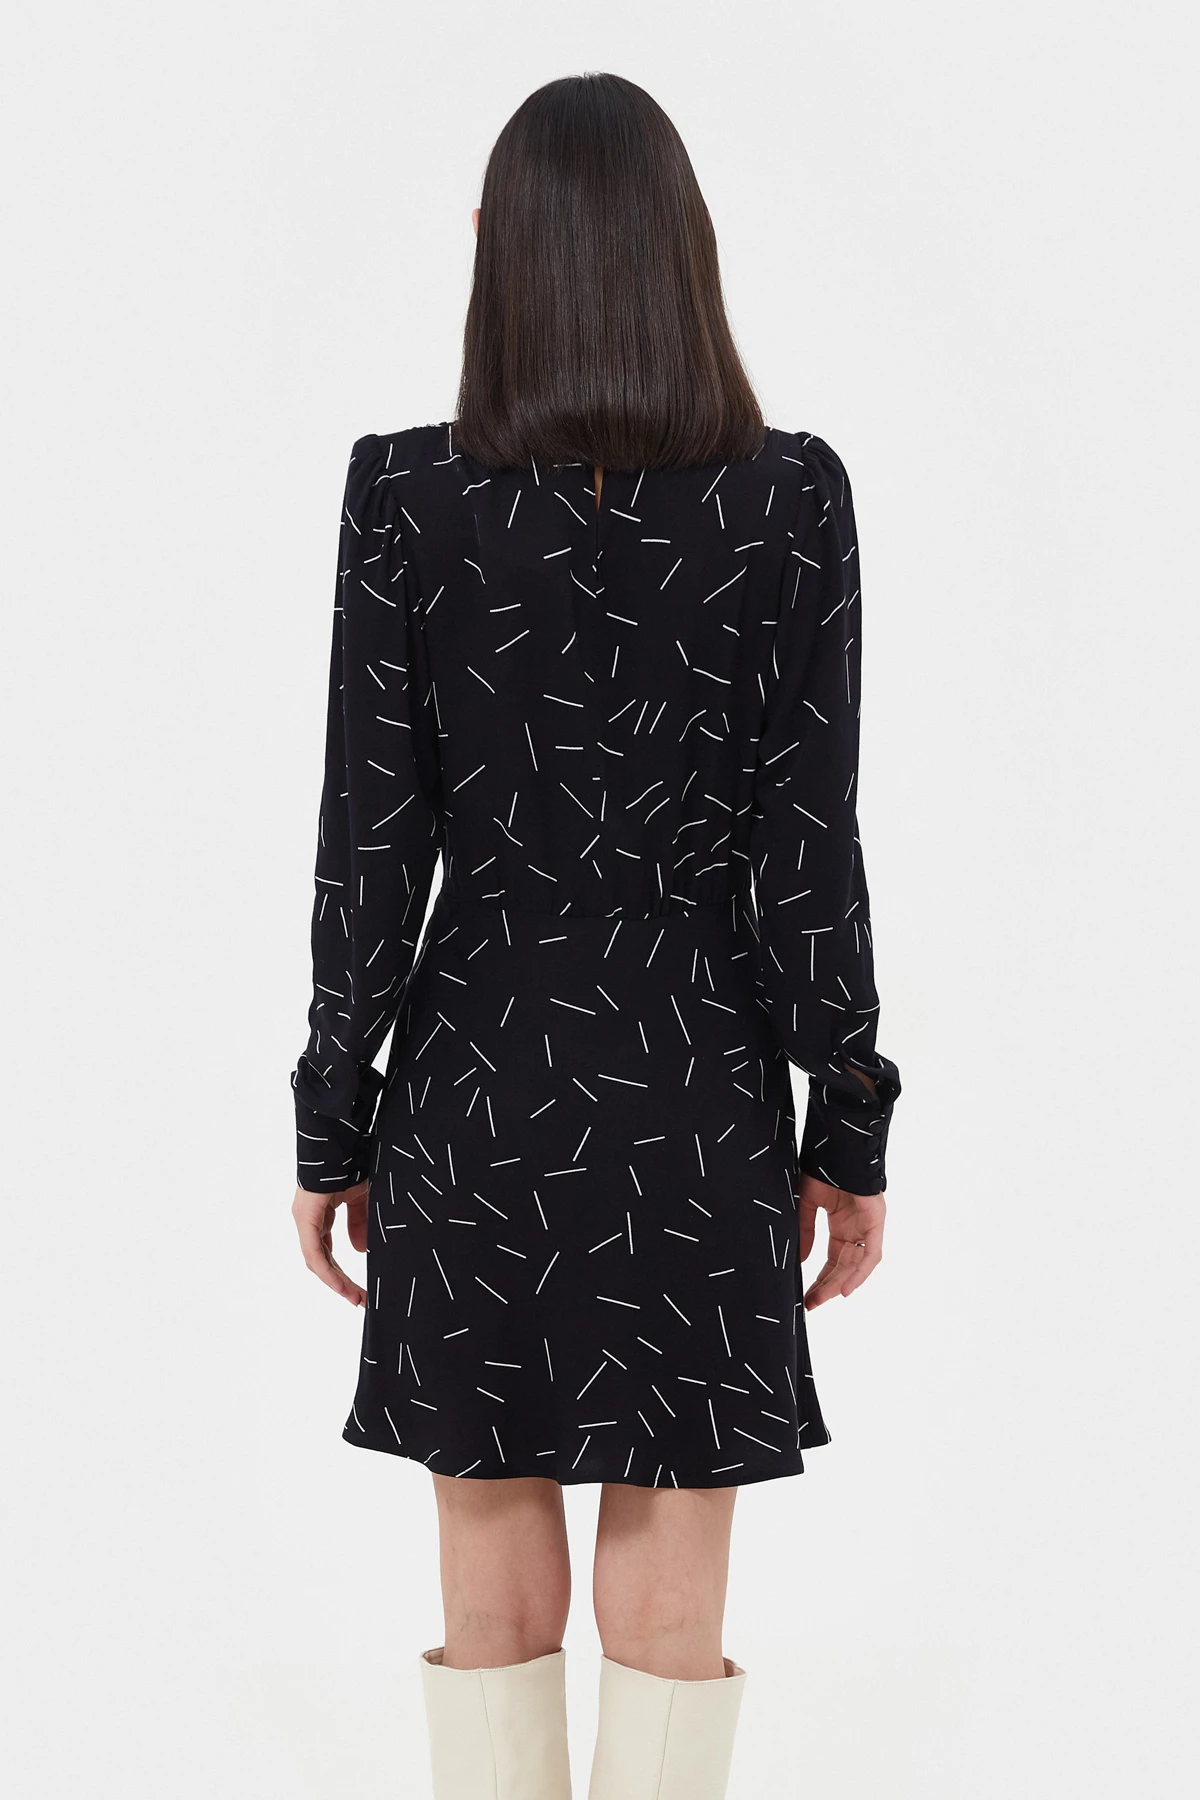 Black viscose mini dress in geometric print, photo 2